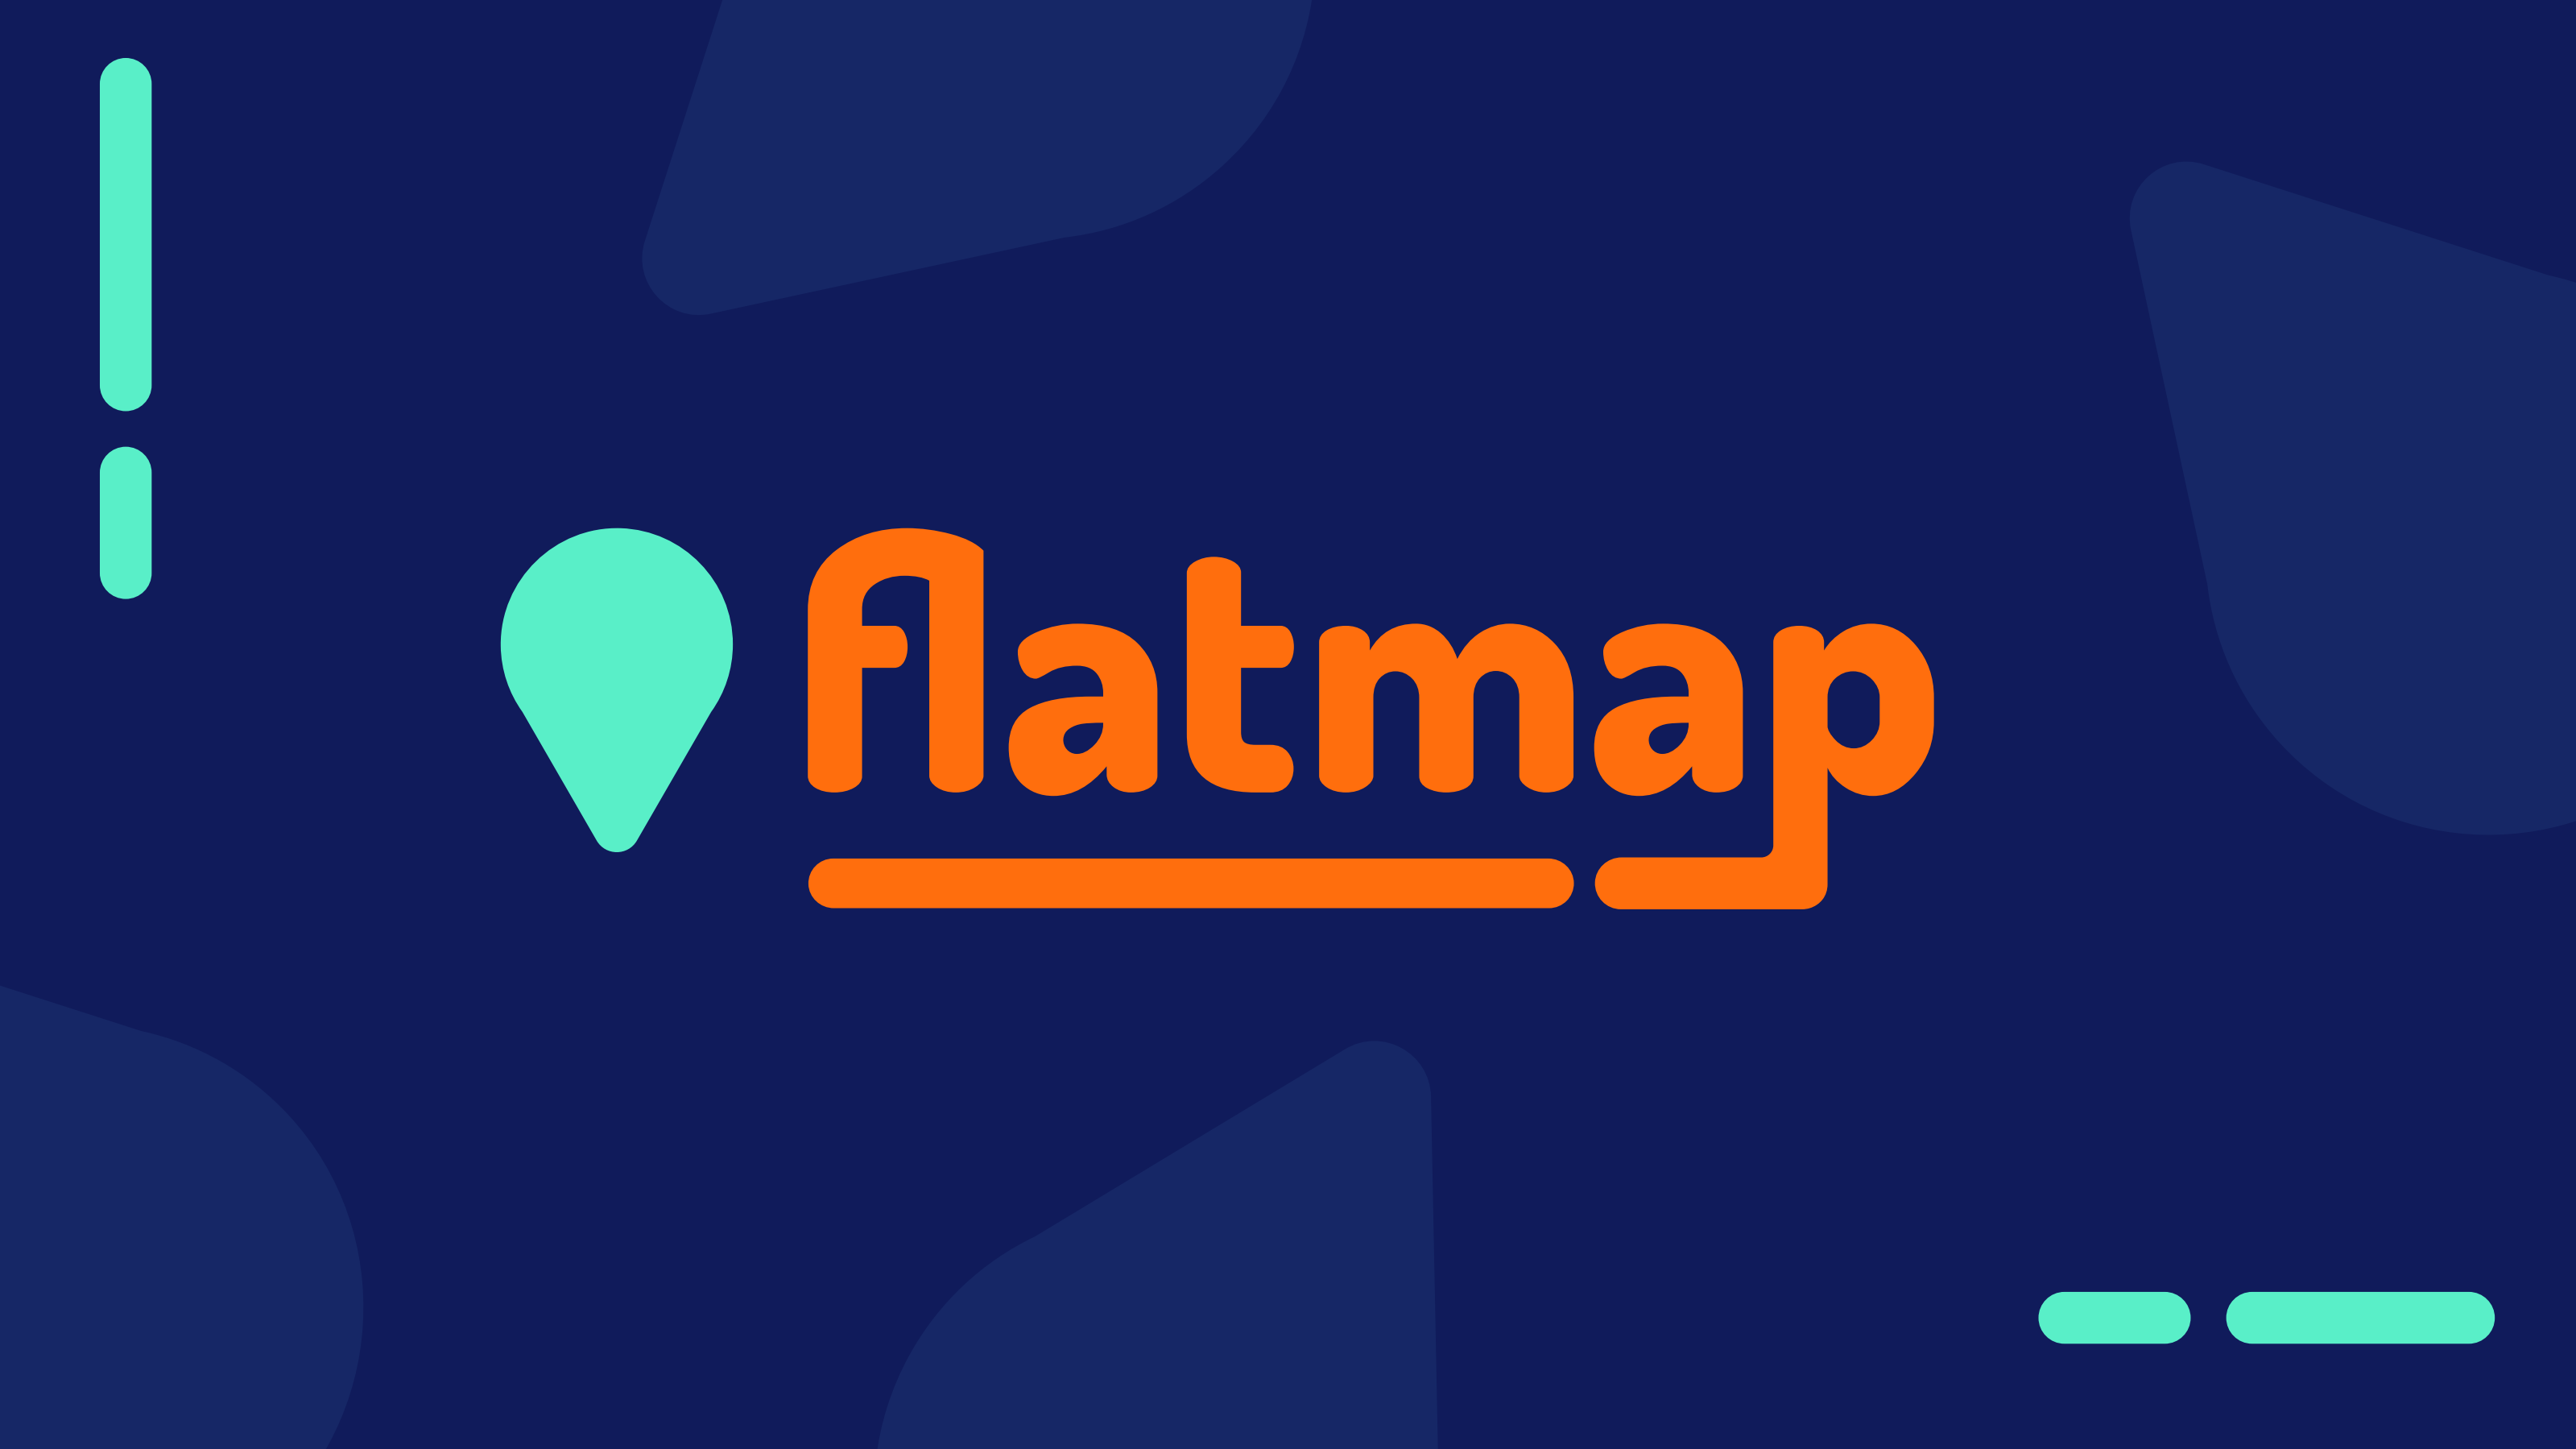 flatmap